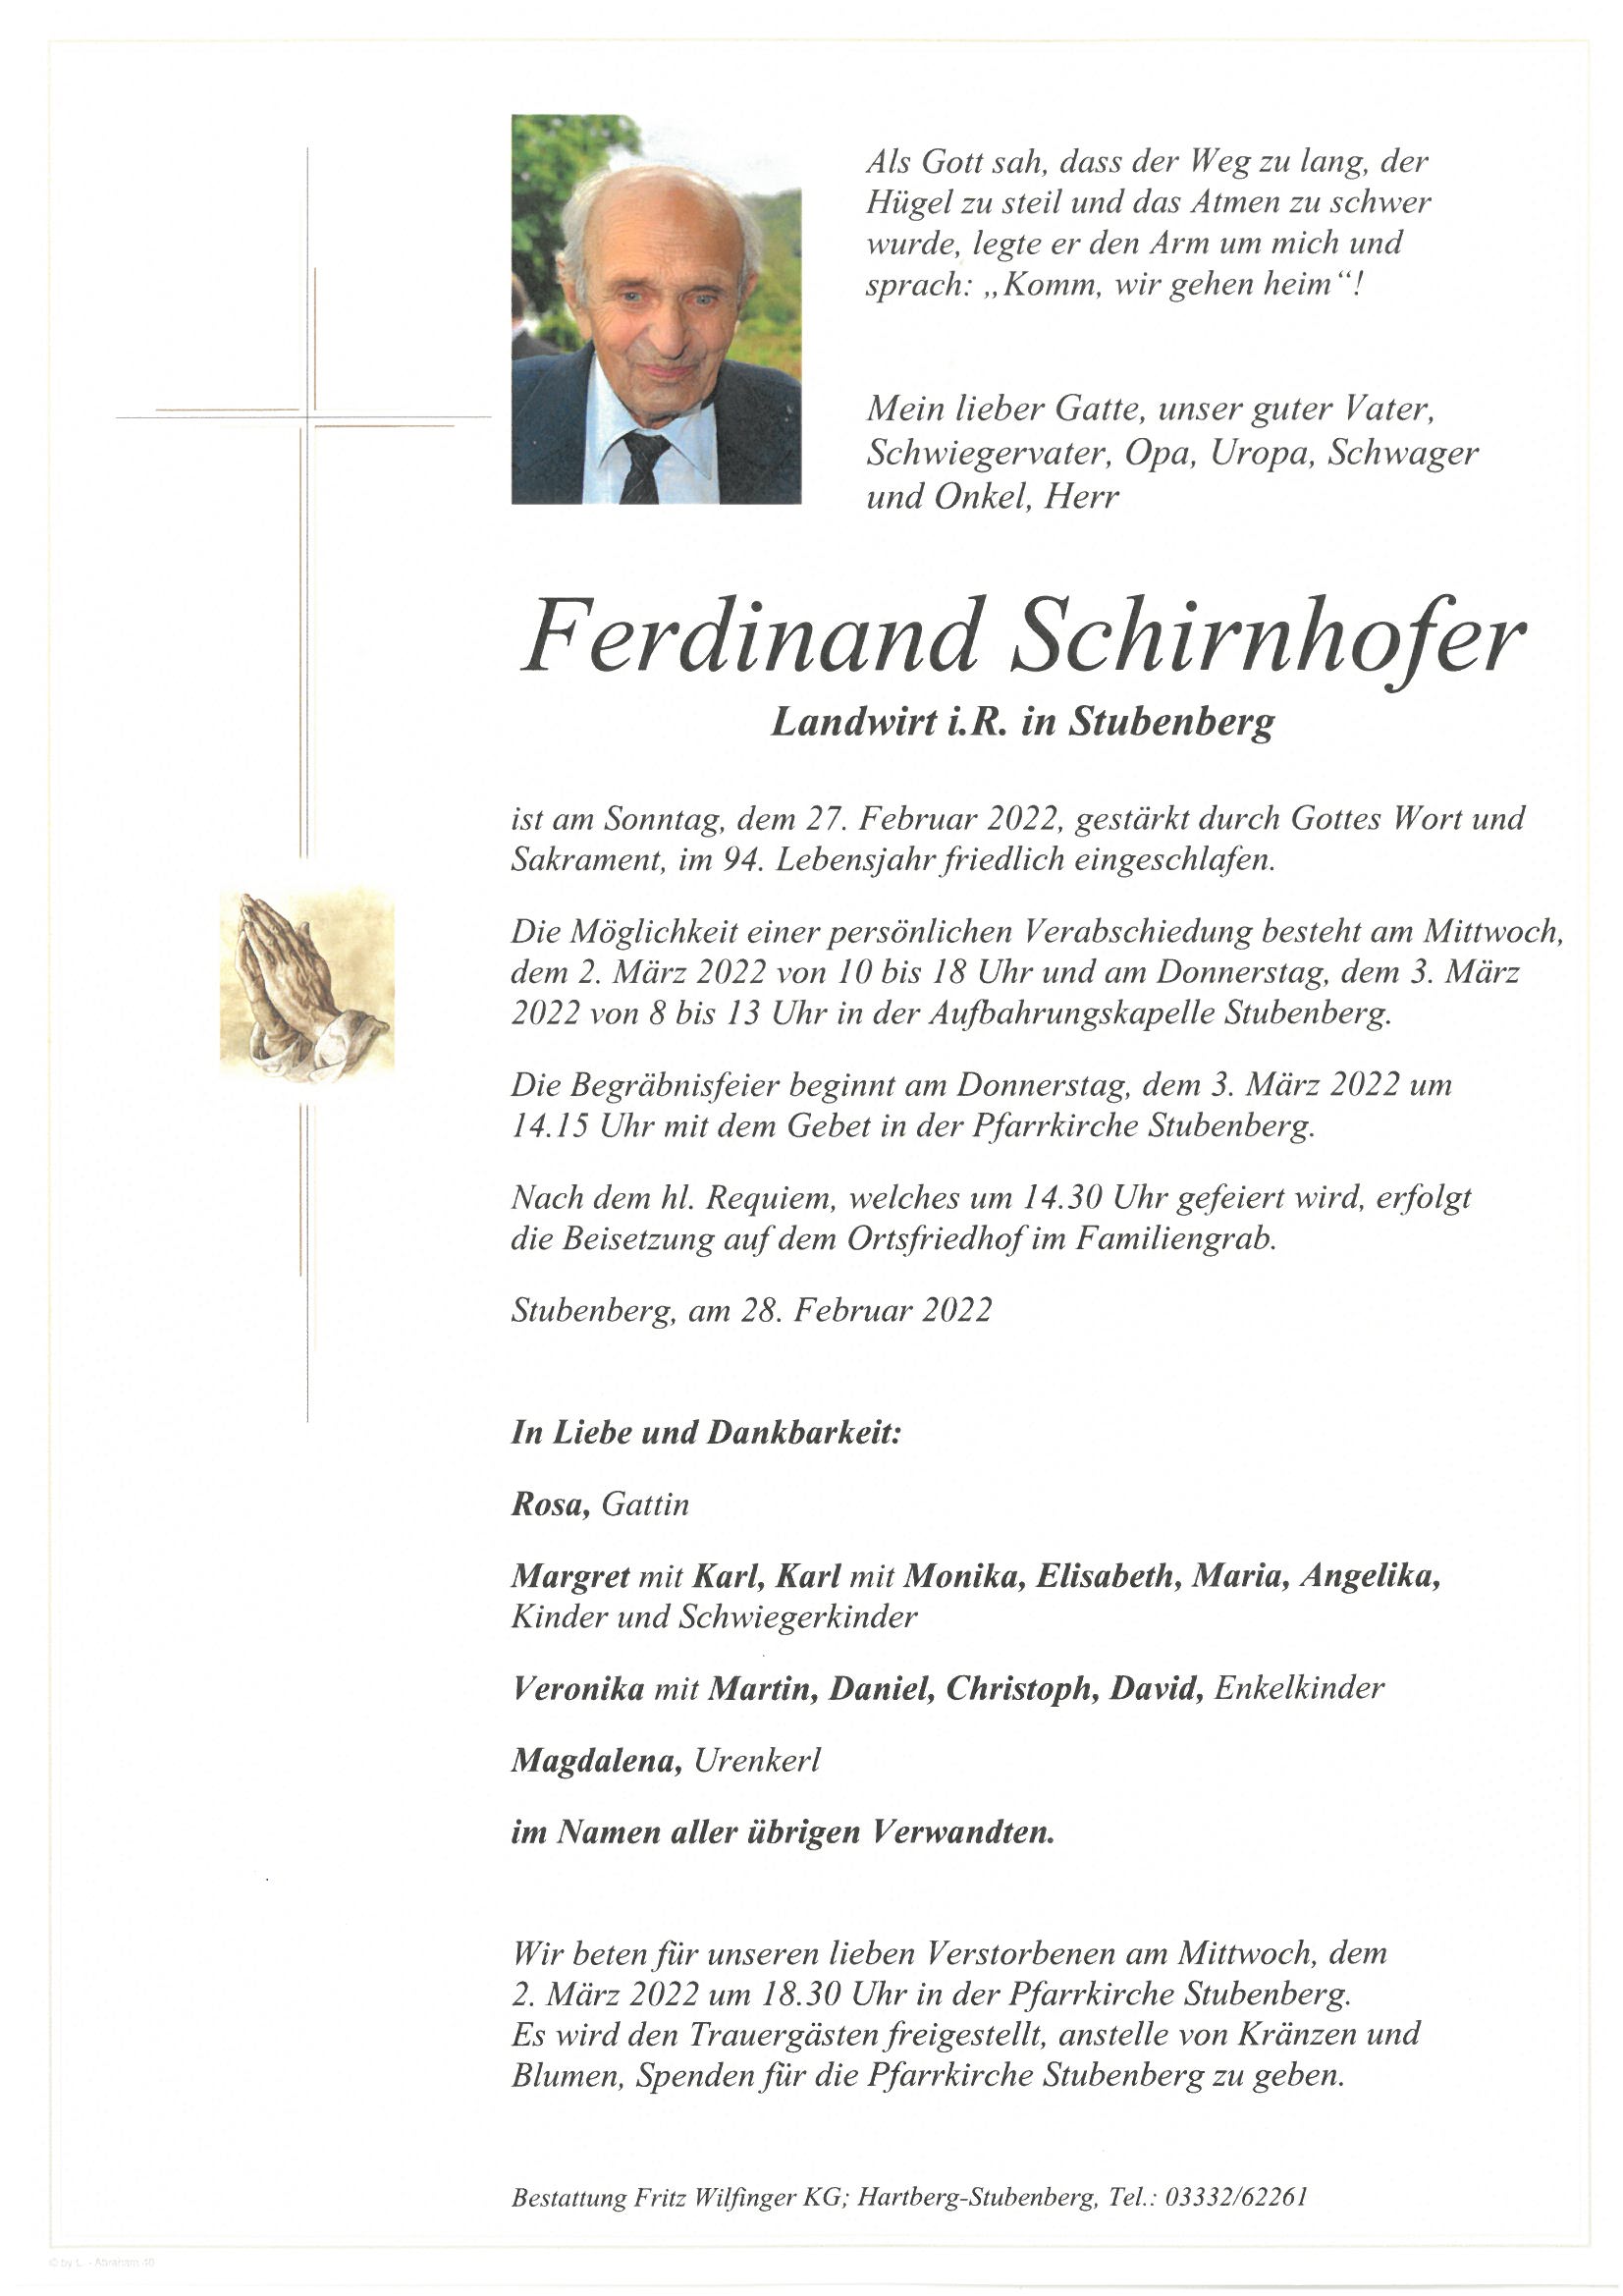 Ferdinand Schirnhofer, Stubenberg